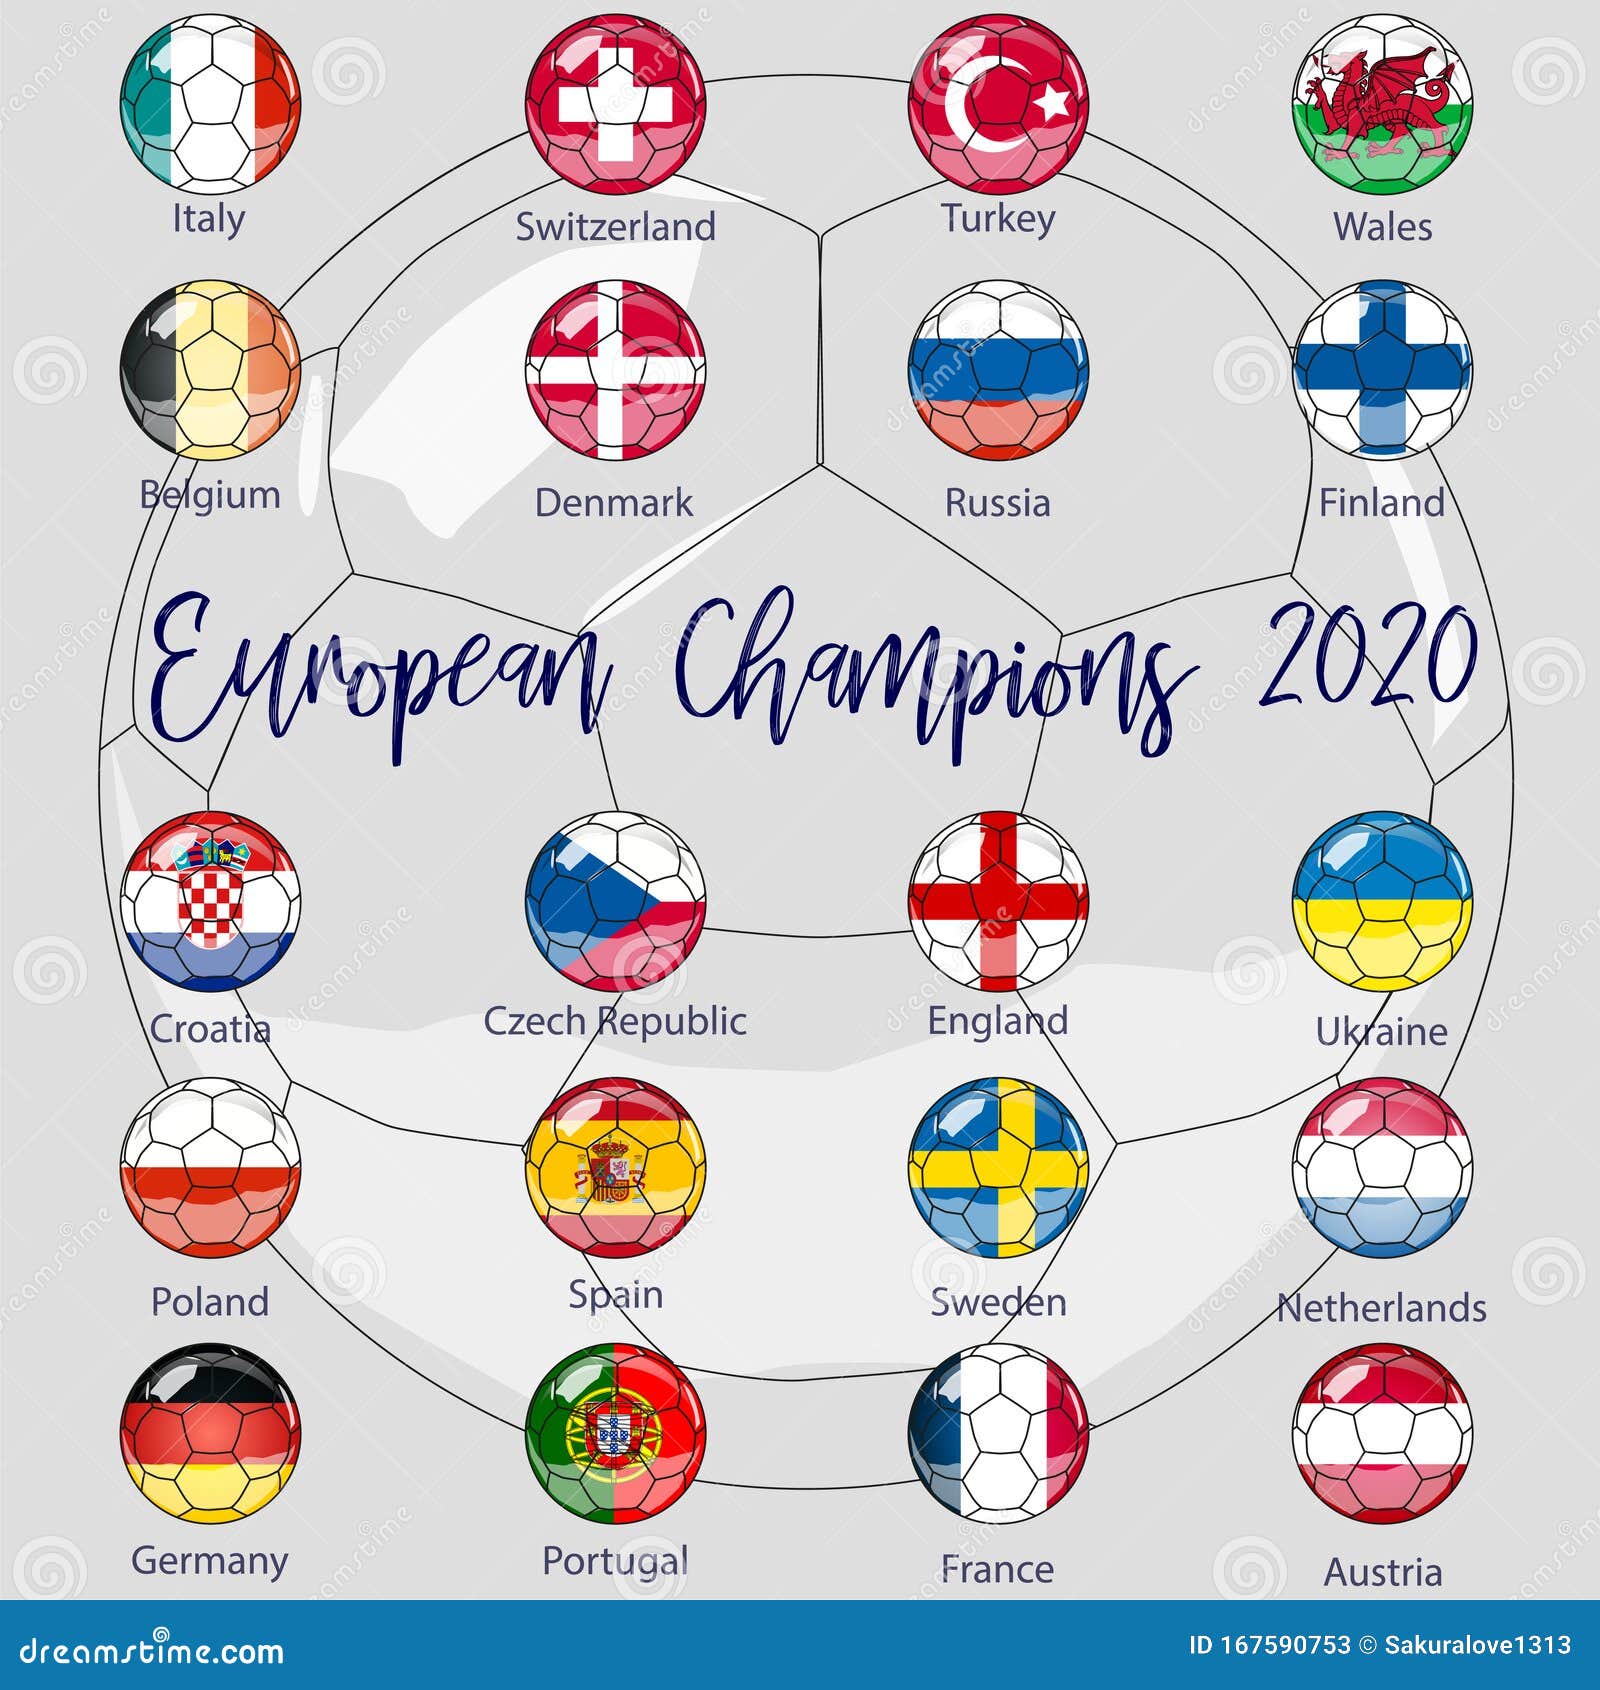 24 Nations 3 x 2 FT Euro 2020 2021 Flag Pack Football UEFA Soccer 